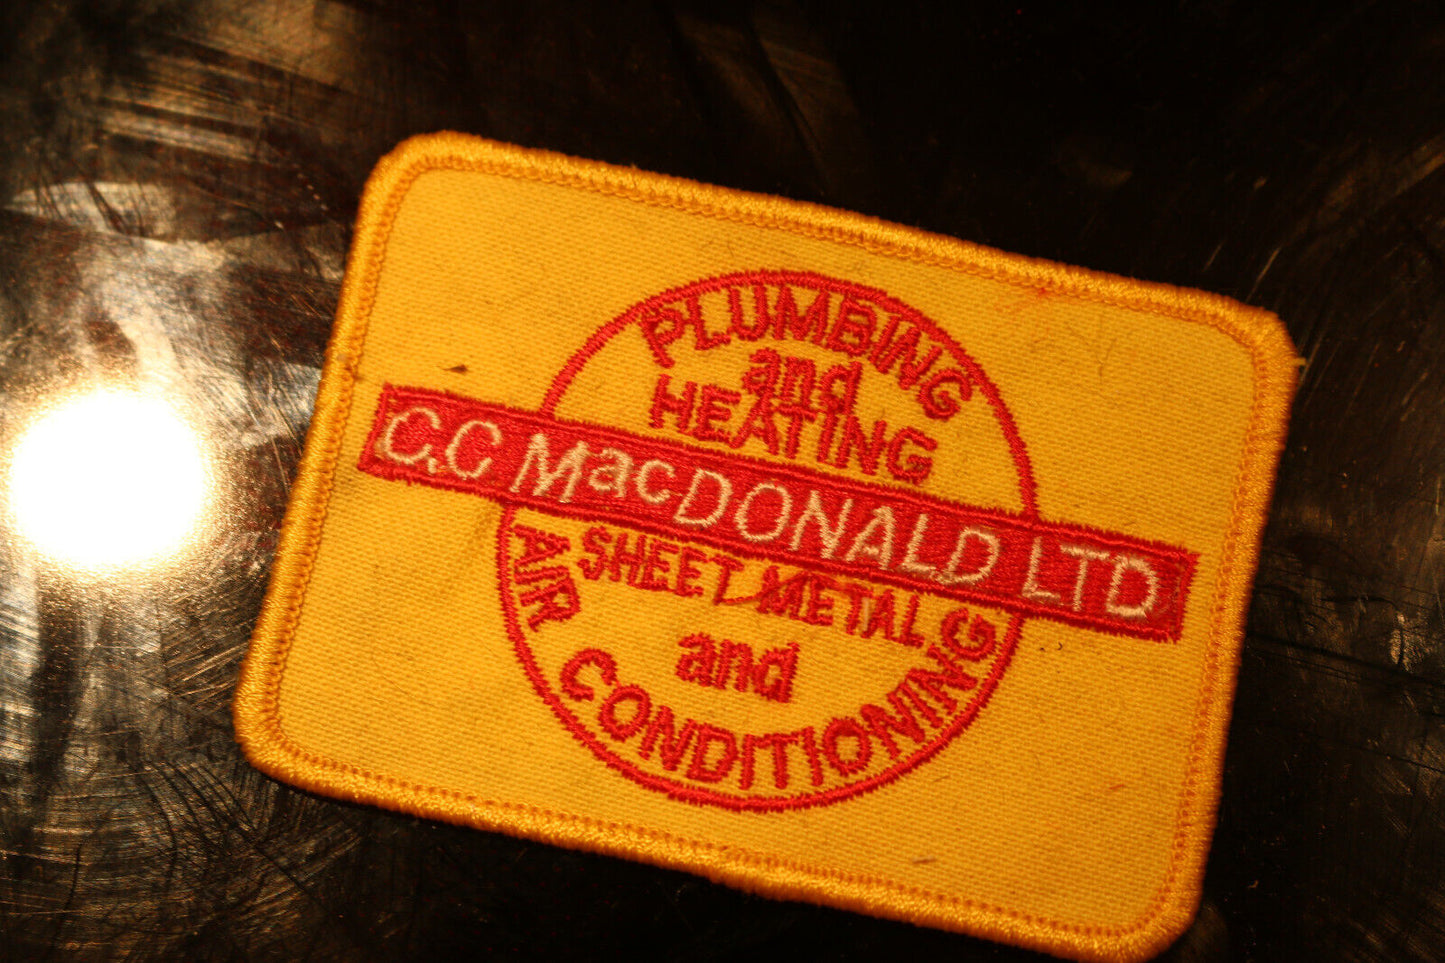 Vintage Shoulder Patche Souvenir Plumbing And Heating Macdonald